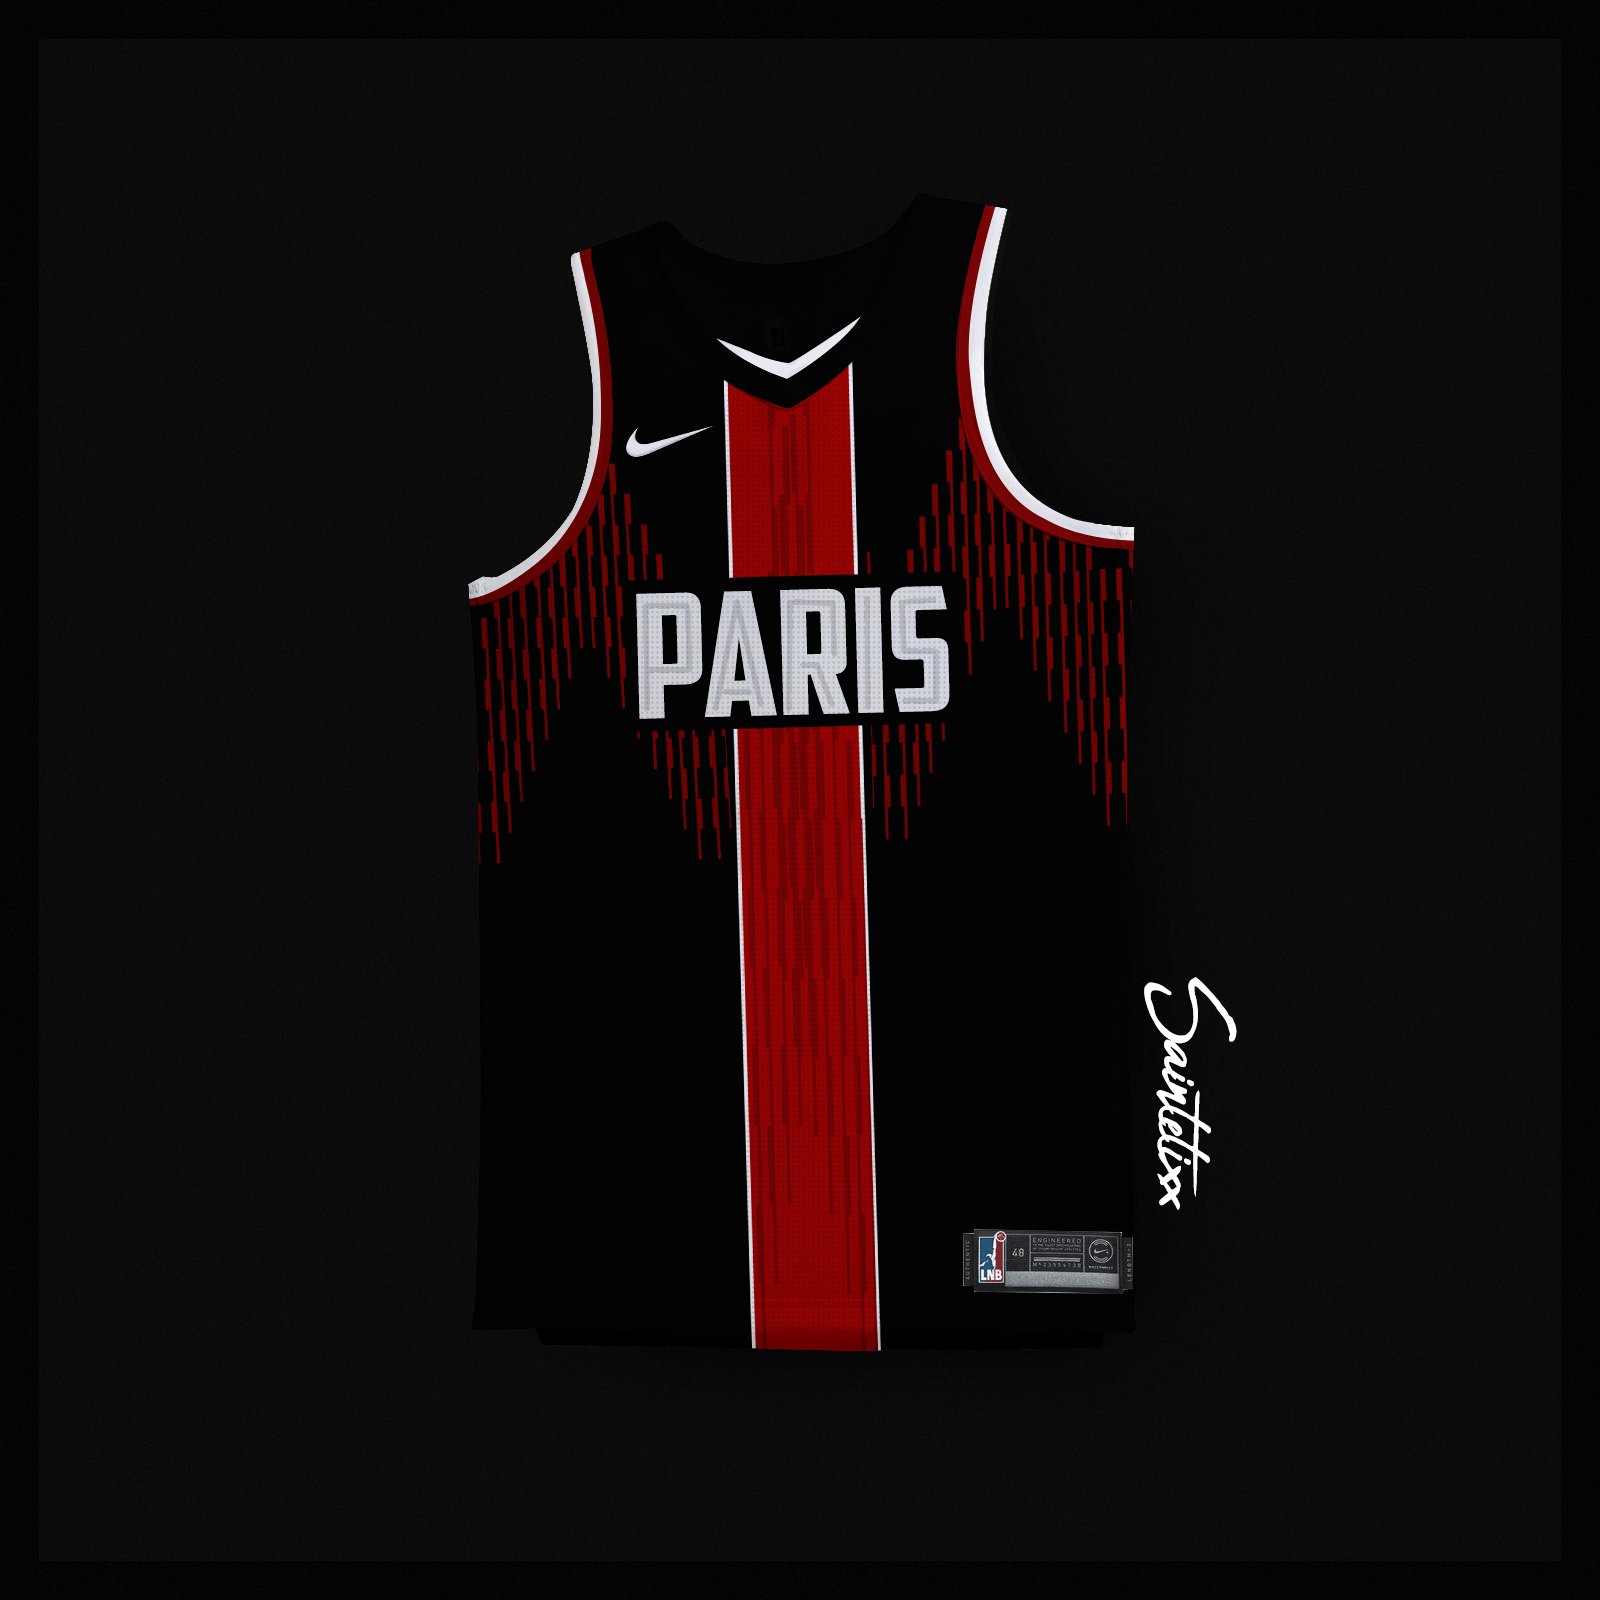 Saintetixx on X: "▪️Paris Basketball x Nike - Hechter version concept .  #LNB #Nike #Paris #ParisBasket https://t.co/jUw7s9ONC4" / X